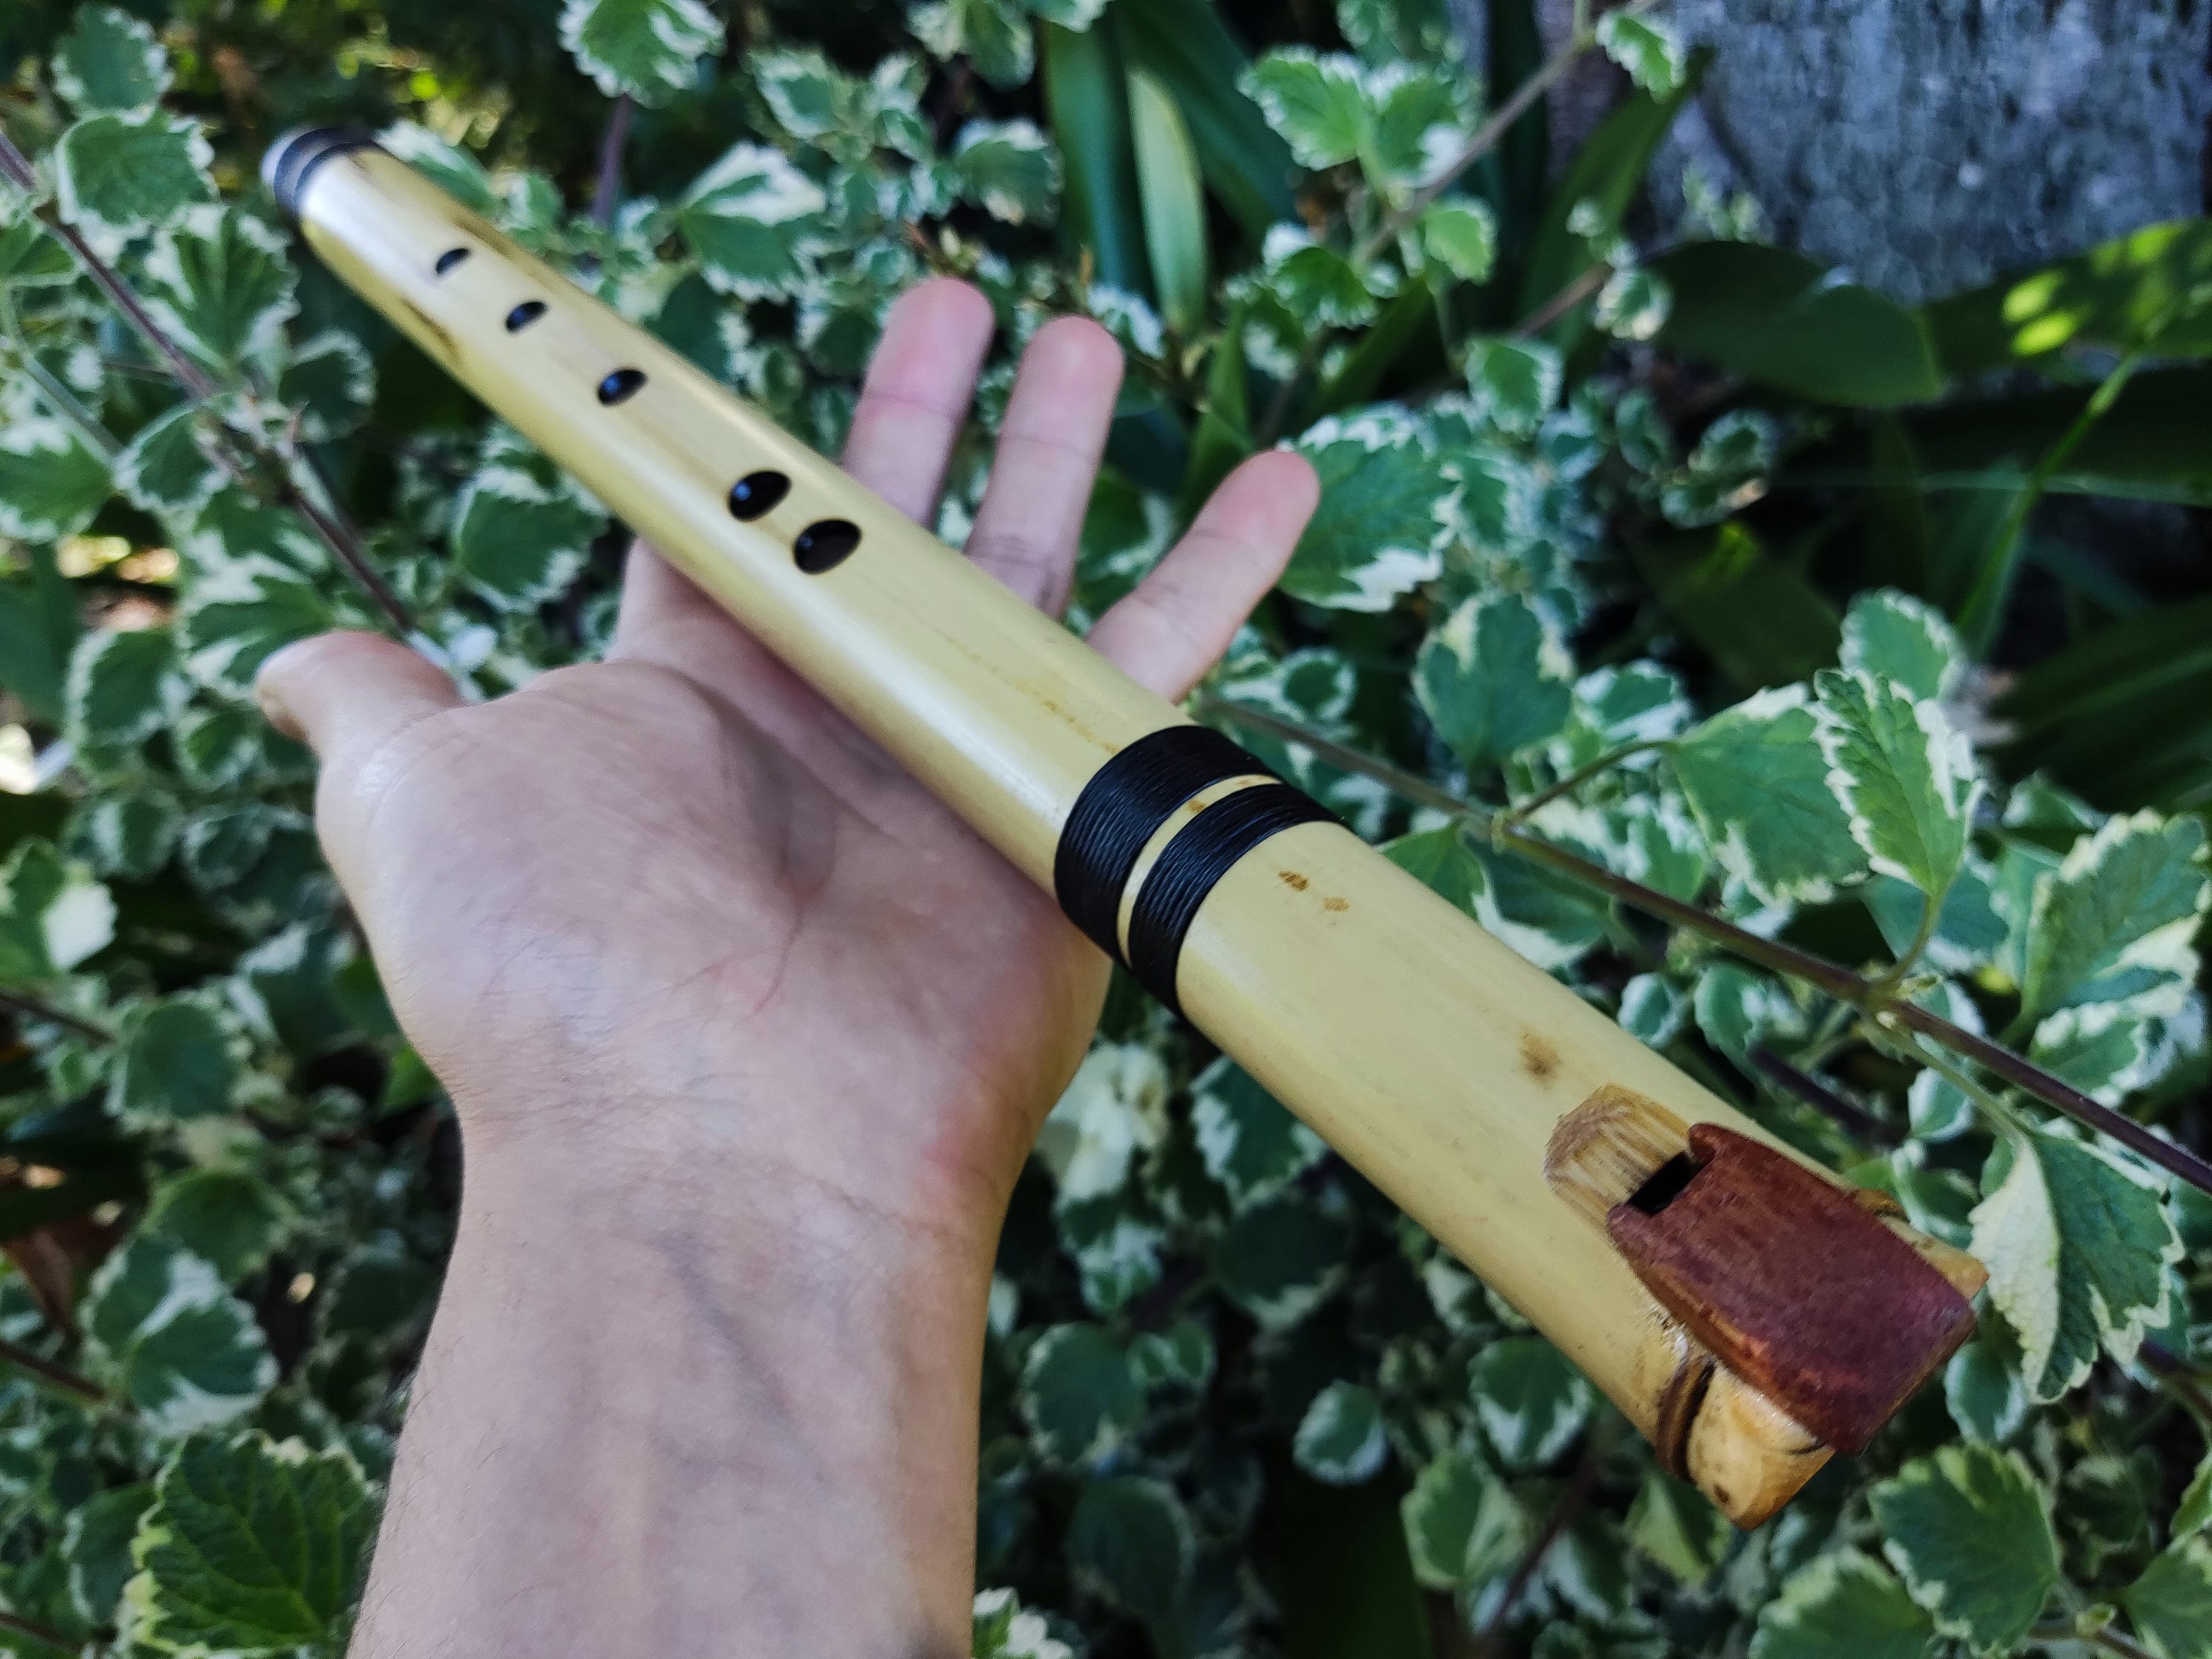 Green Flute RiToEasysports Wooden Lightweight Educational Wooden Flute Toy for Kids Children Practice 